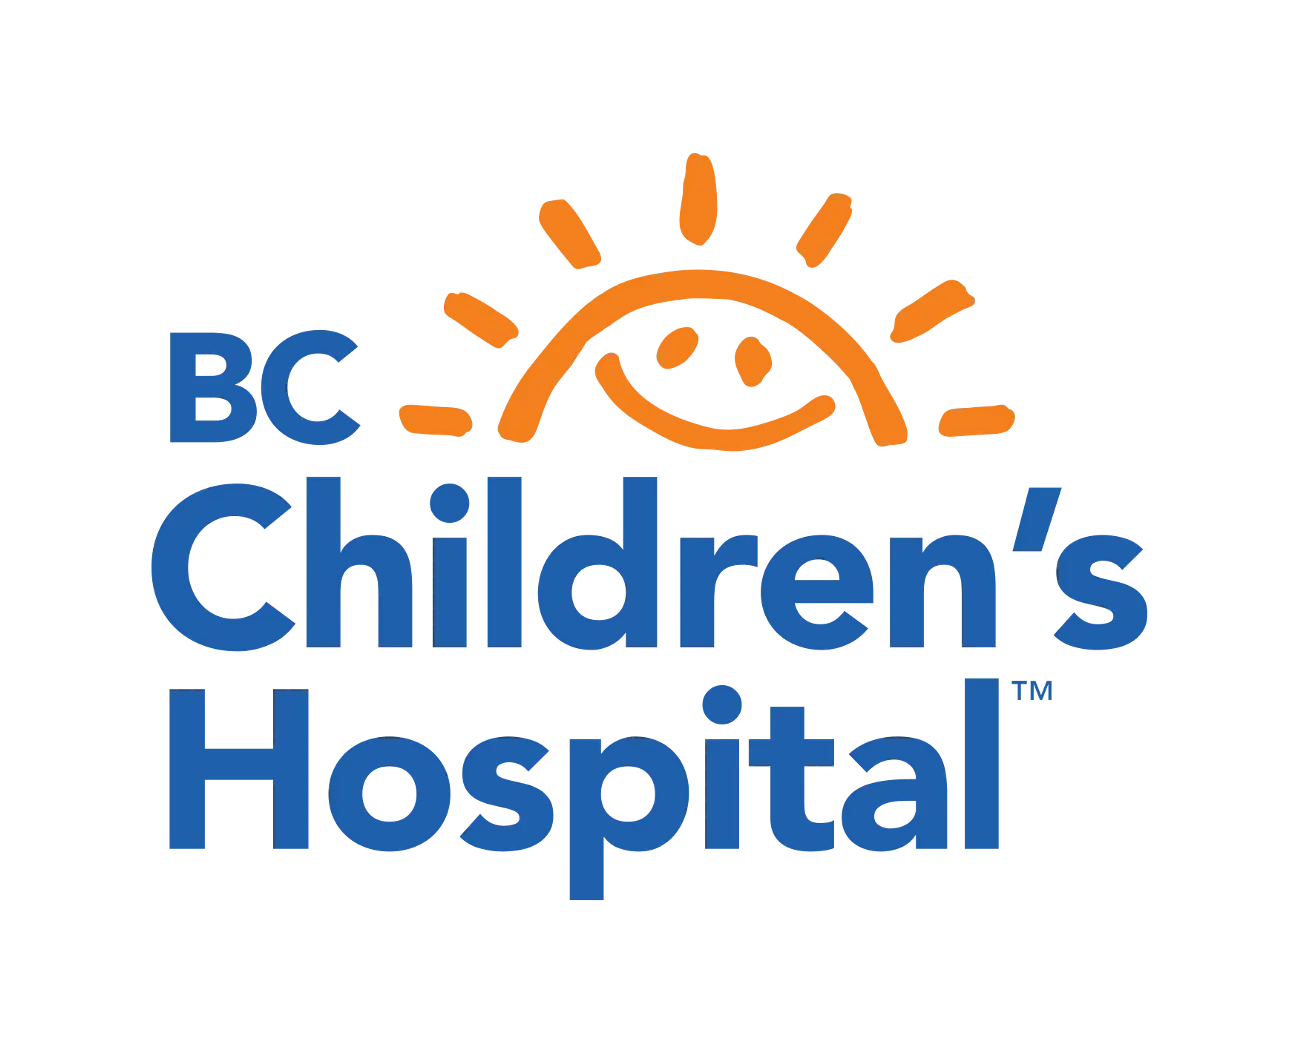 BC Childrens Hospital Logo